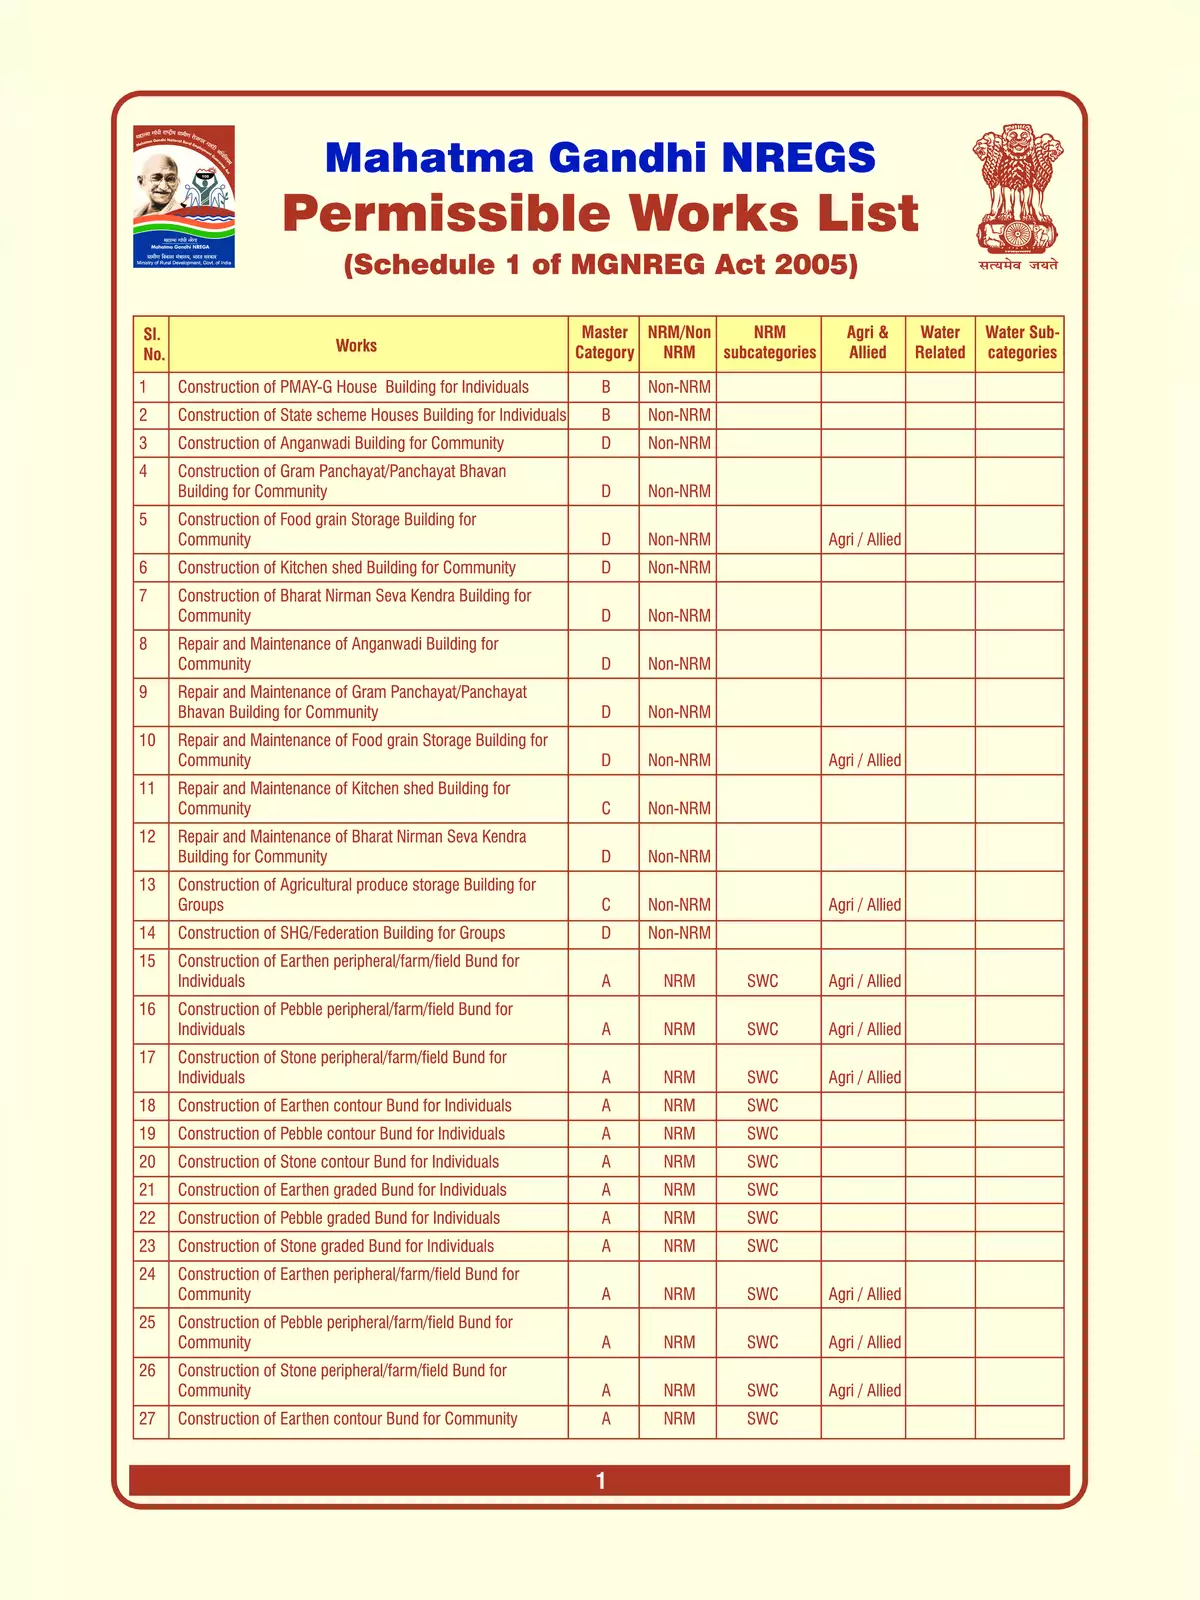 MGNREGA Permissible Work List